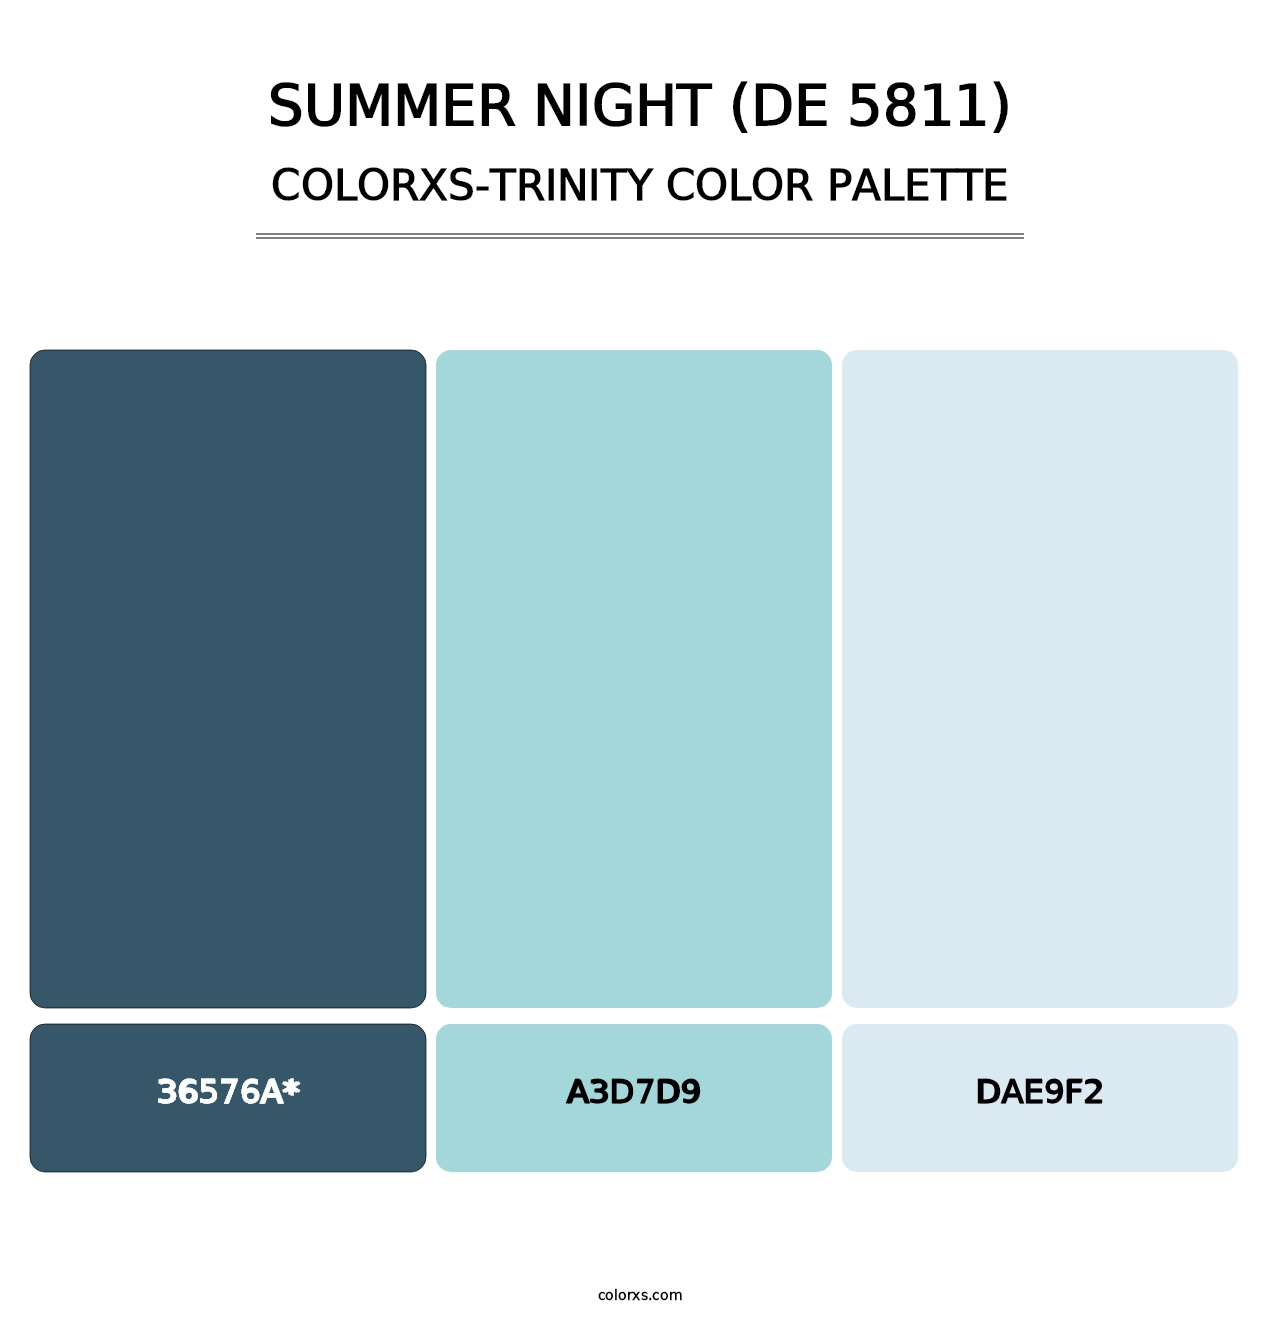 Summer Night (DE 5811) - Colorxs Trinity Palette